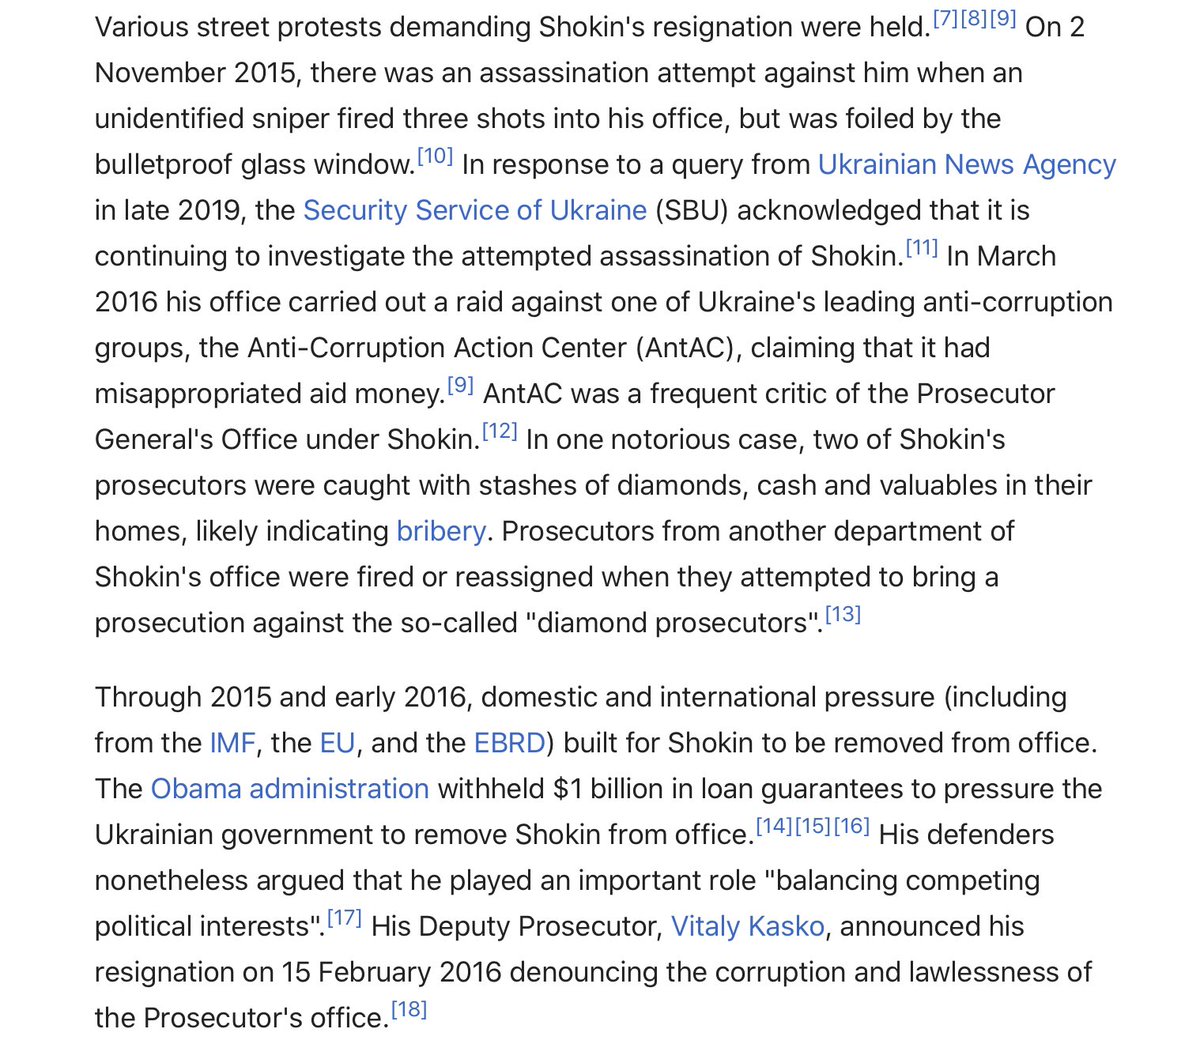 Neverending story. https://twitter.com/democracyjourno/status/1185394879590846469?s=21Shokin was not a white hat. https://en.m.wikipedia.org/wiki/Viktor_Shokin